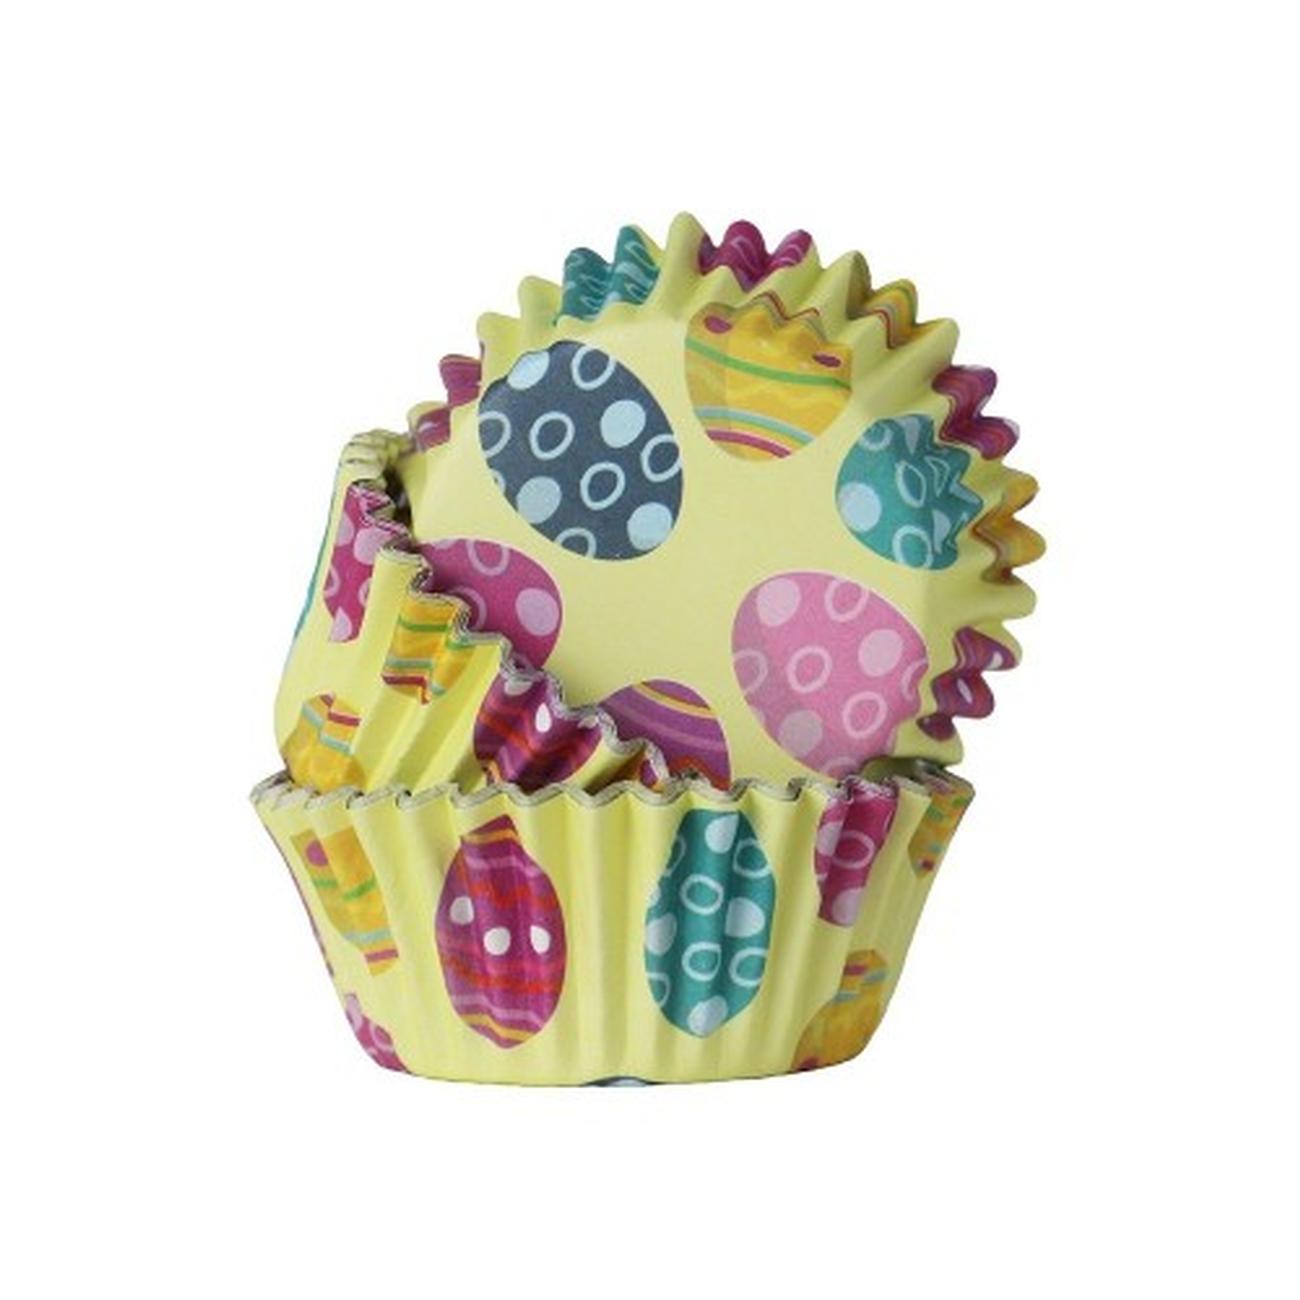 pme-30-foil-baking-cases-Easter-eggs - PME 30 Easter Eggs Foil Cupcake Cases